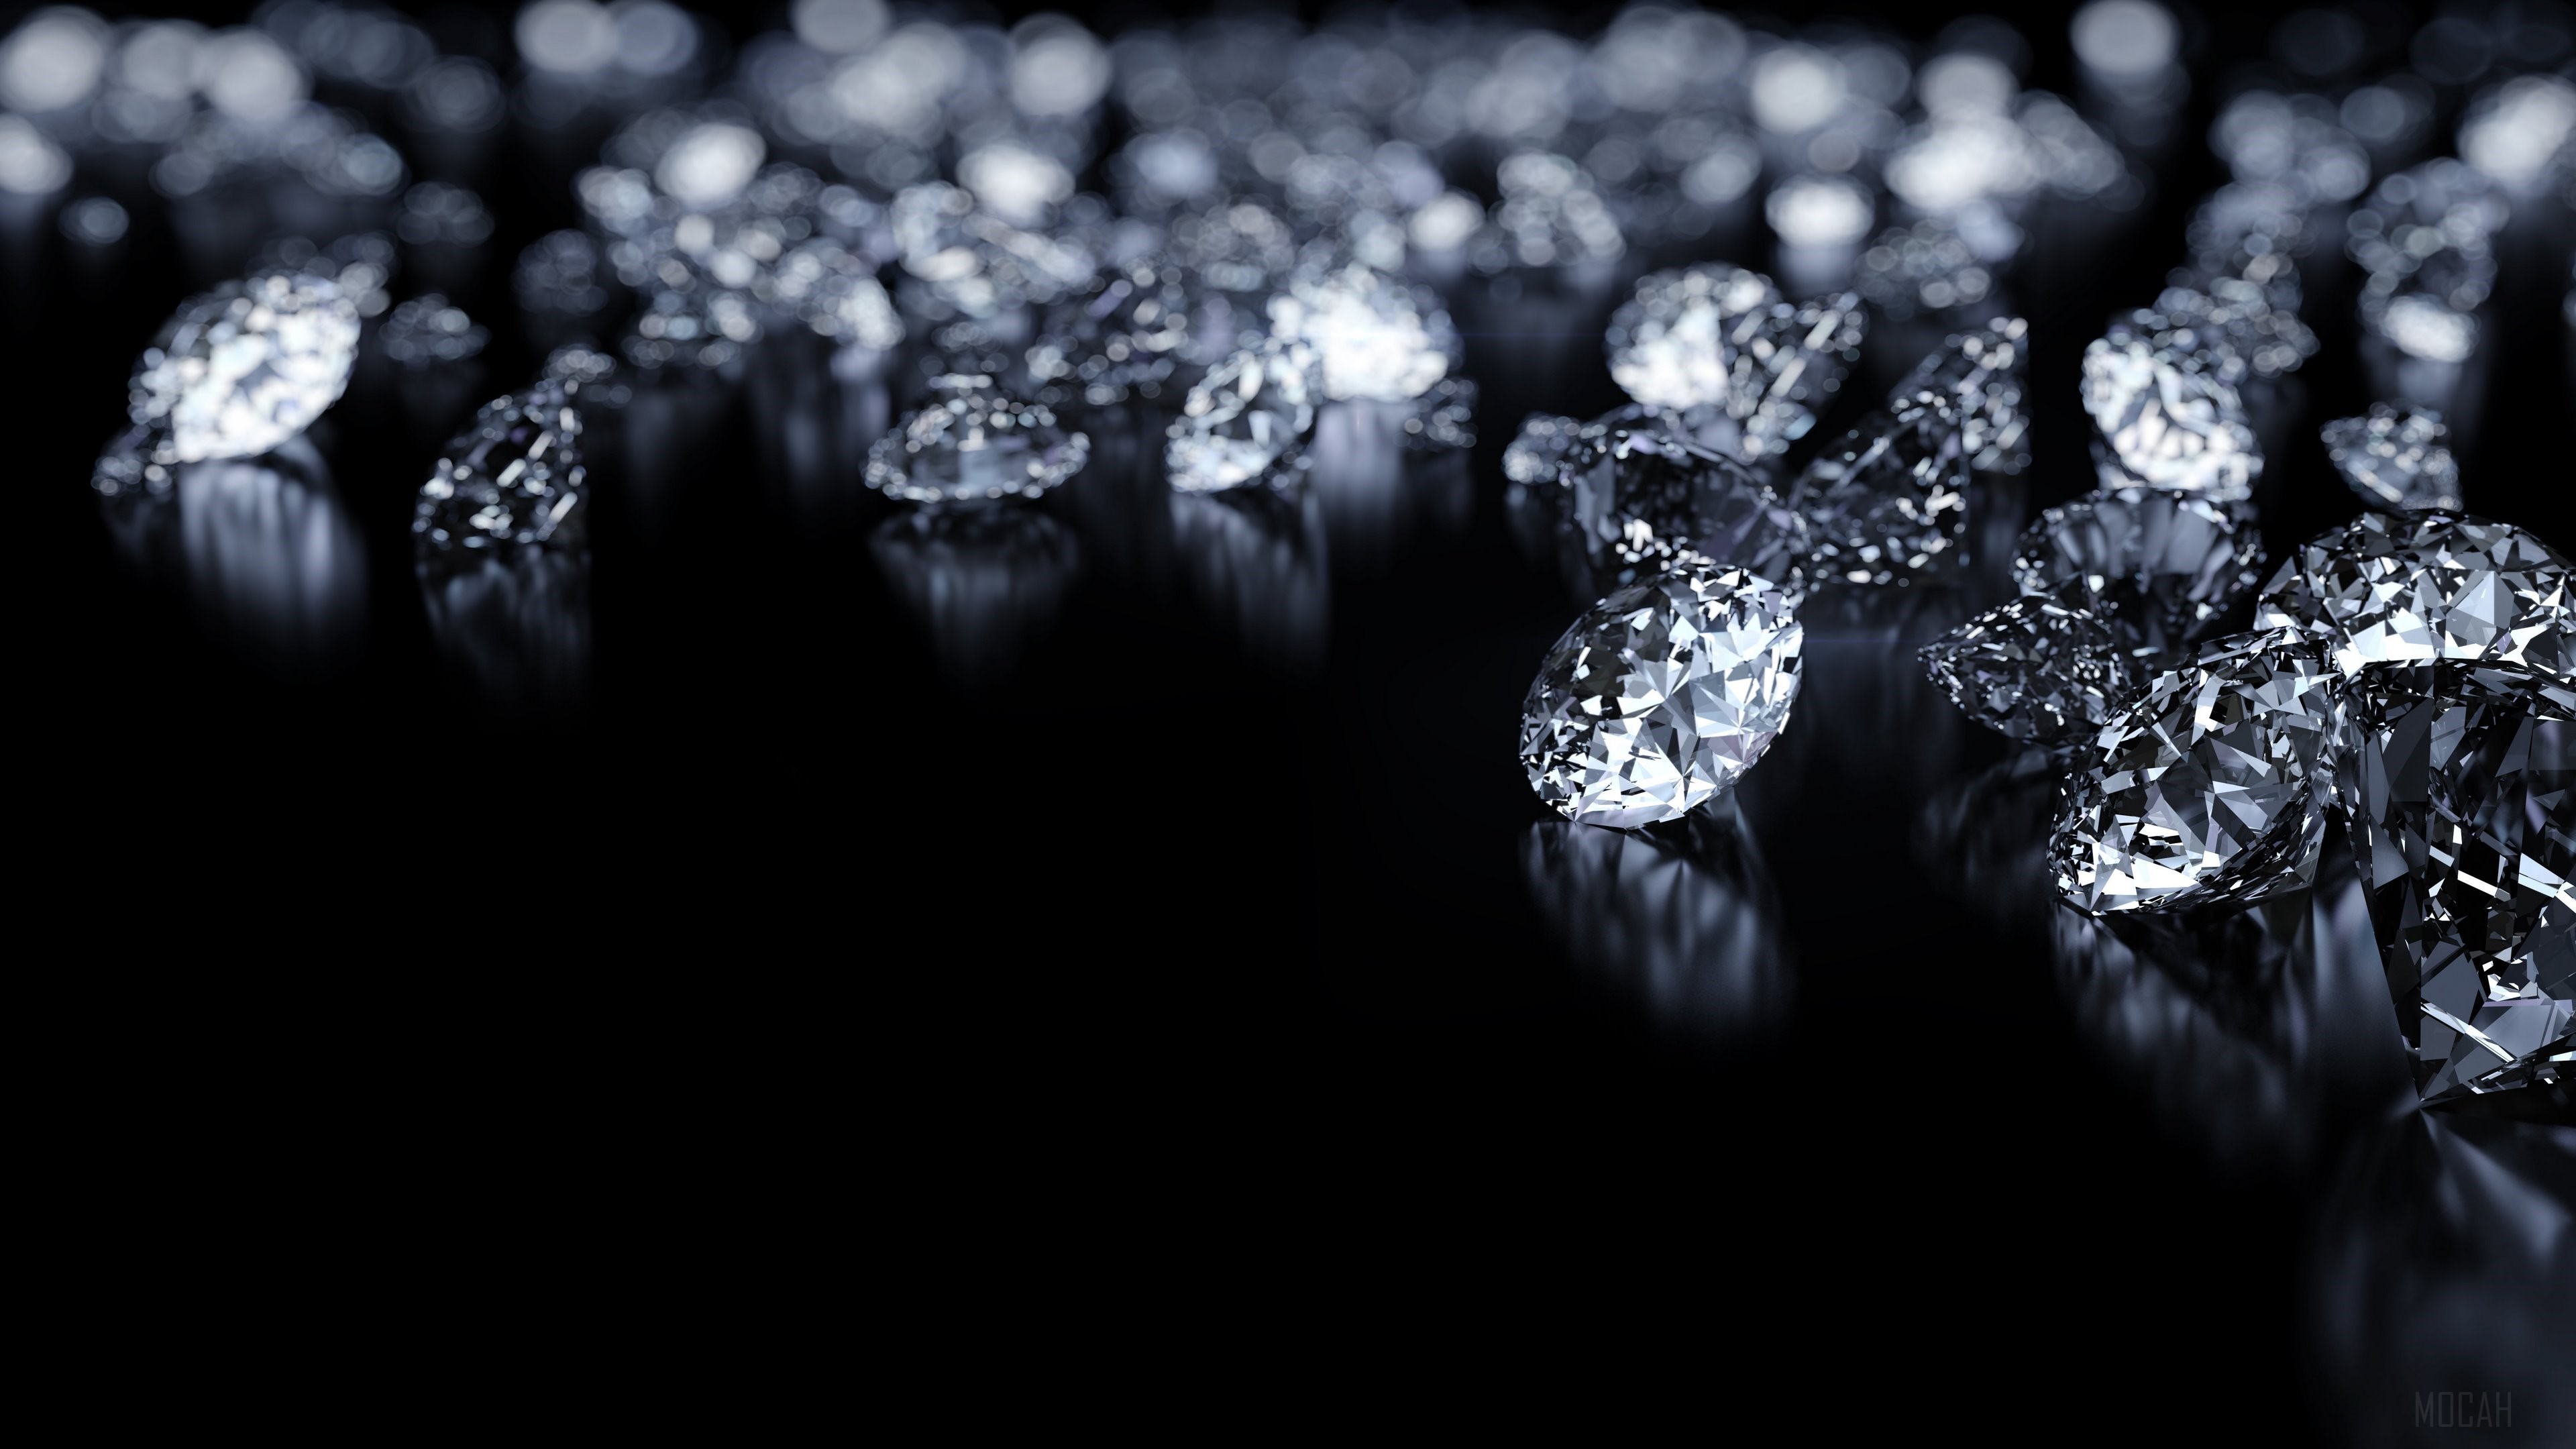 A group of diamonds on a black background - Diamond